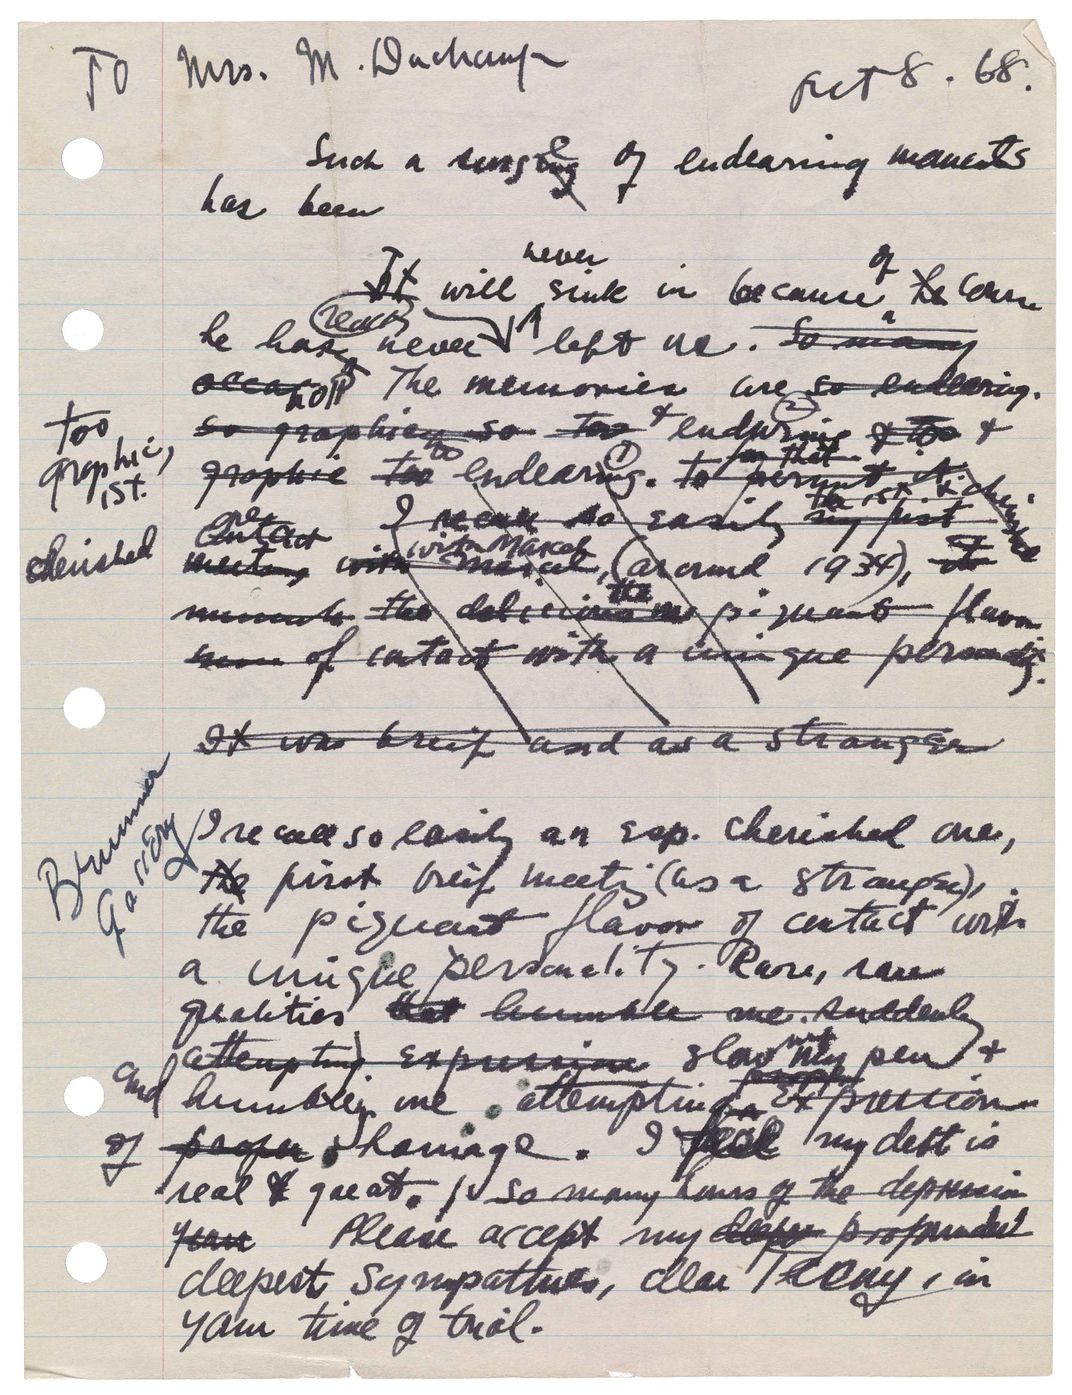 Joseph Cornell letter, October 8 and 9, 1968